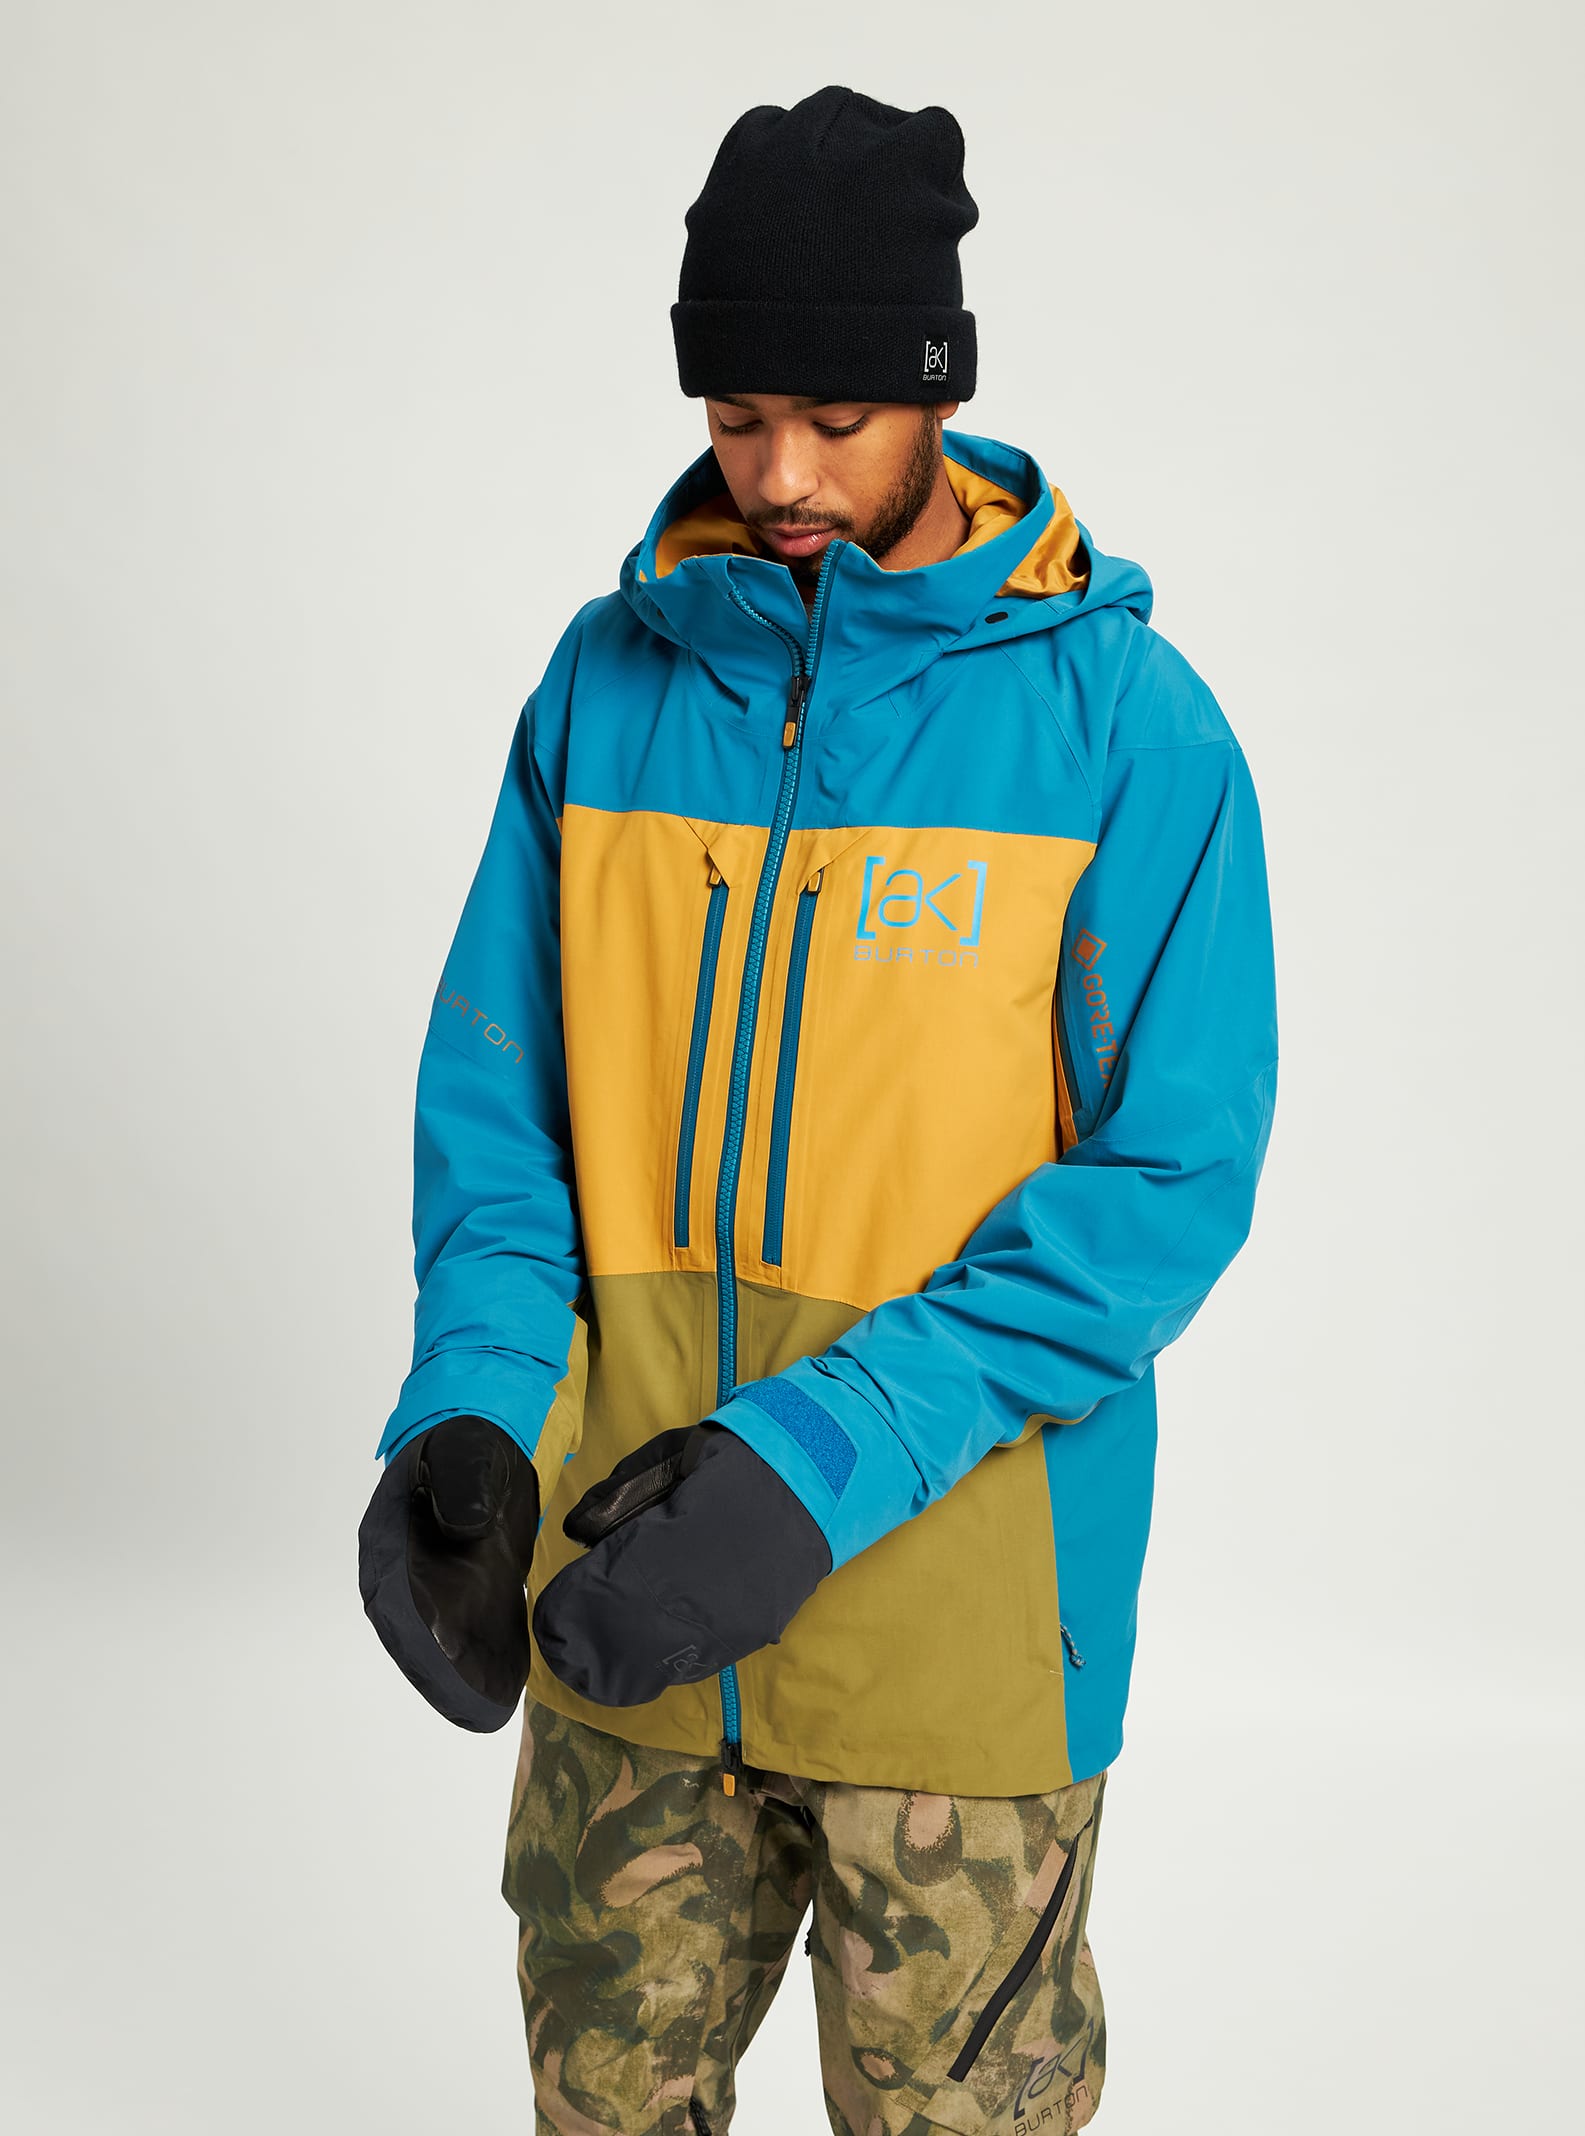 Details about   Burton Haze Varsity Jacket Mens Snowboard Ski Insulated Waterproof Coat Tan S L 